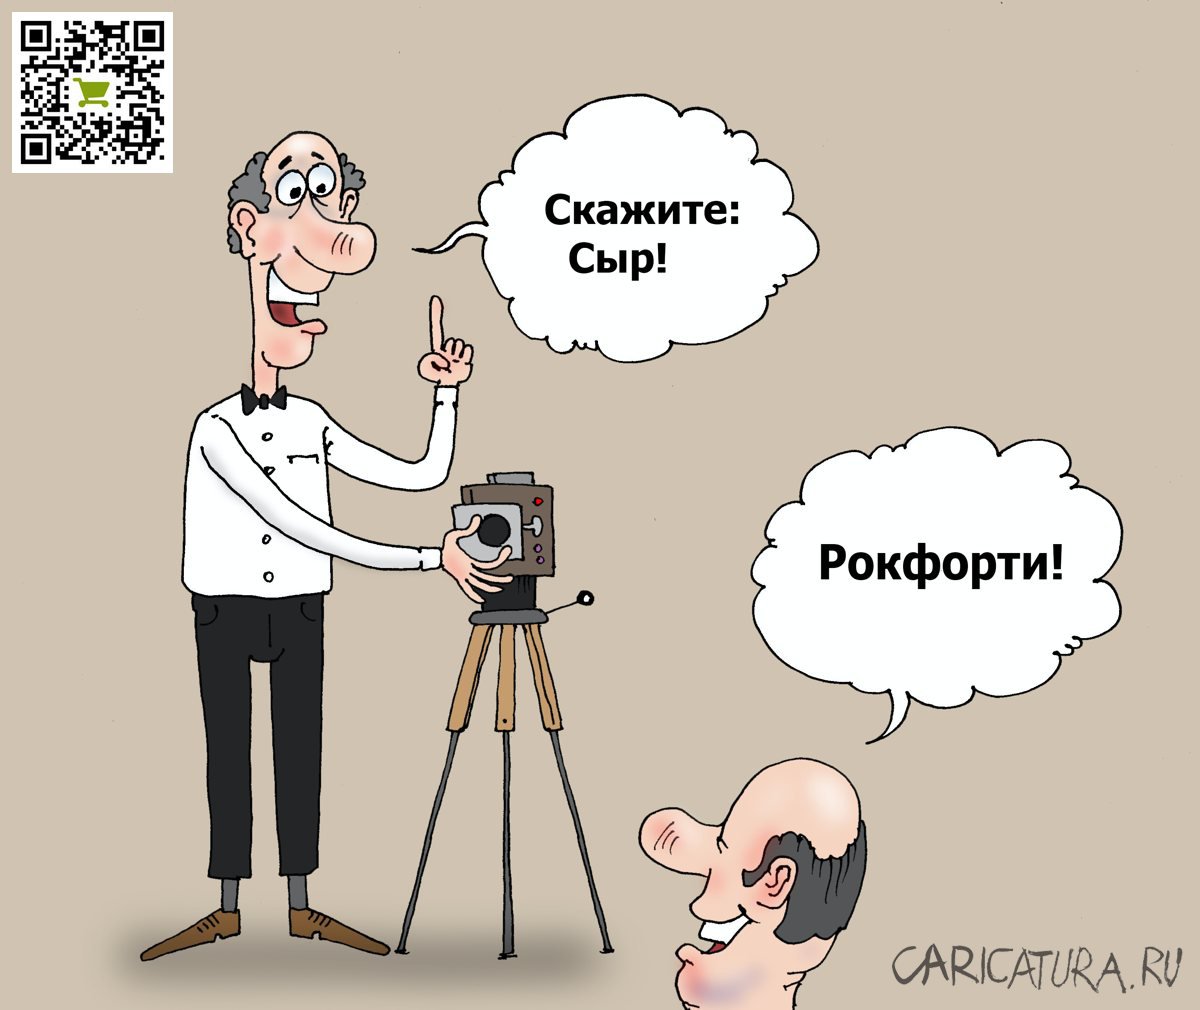 Карикатура "Фото на память", Валерий Тарасенко